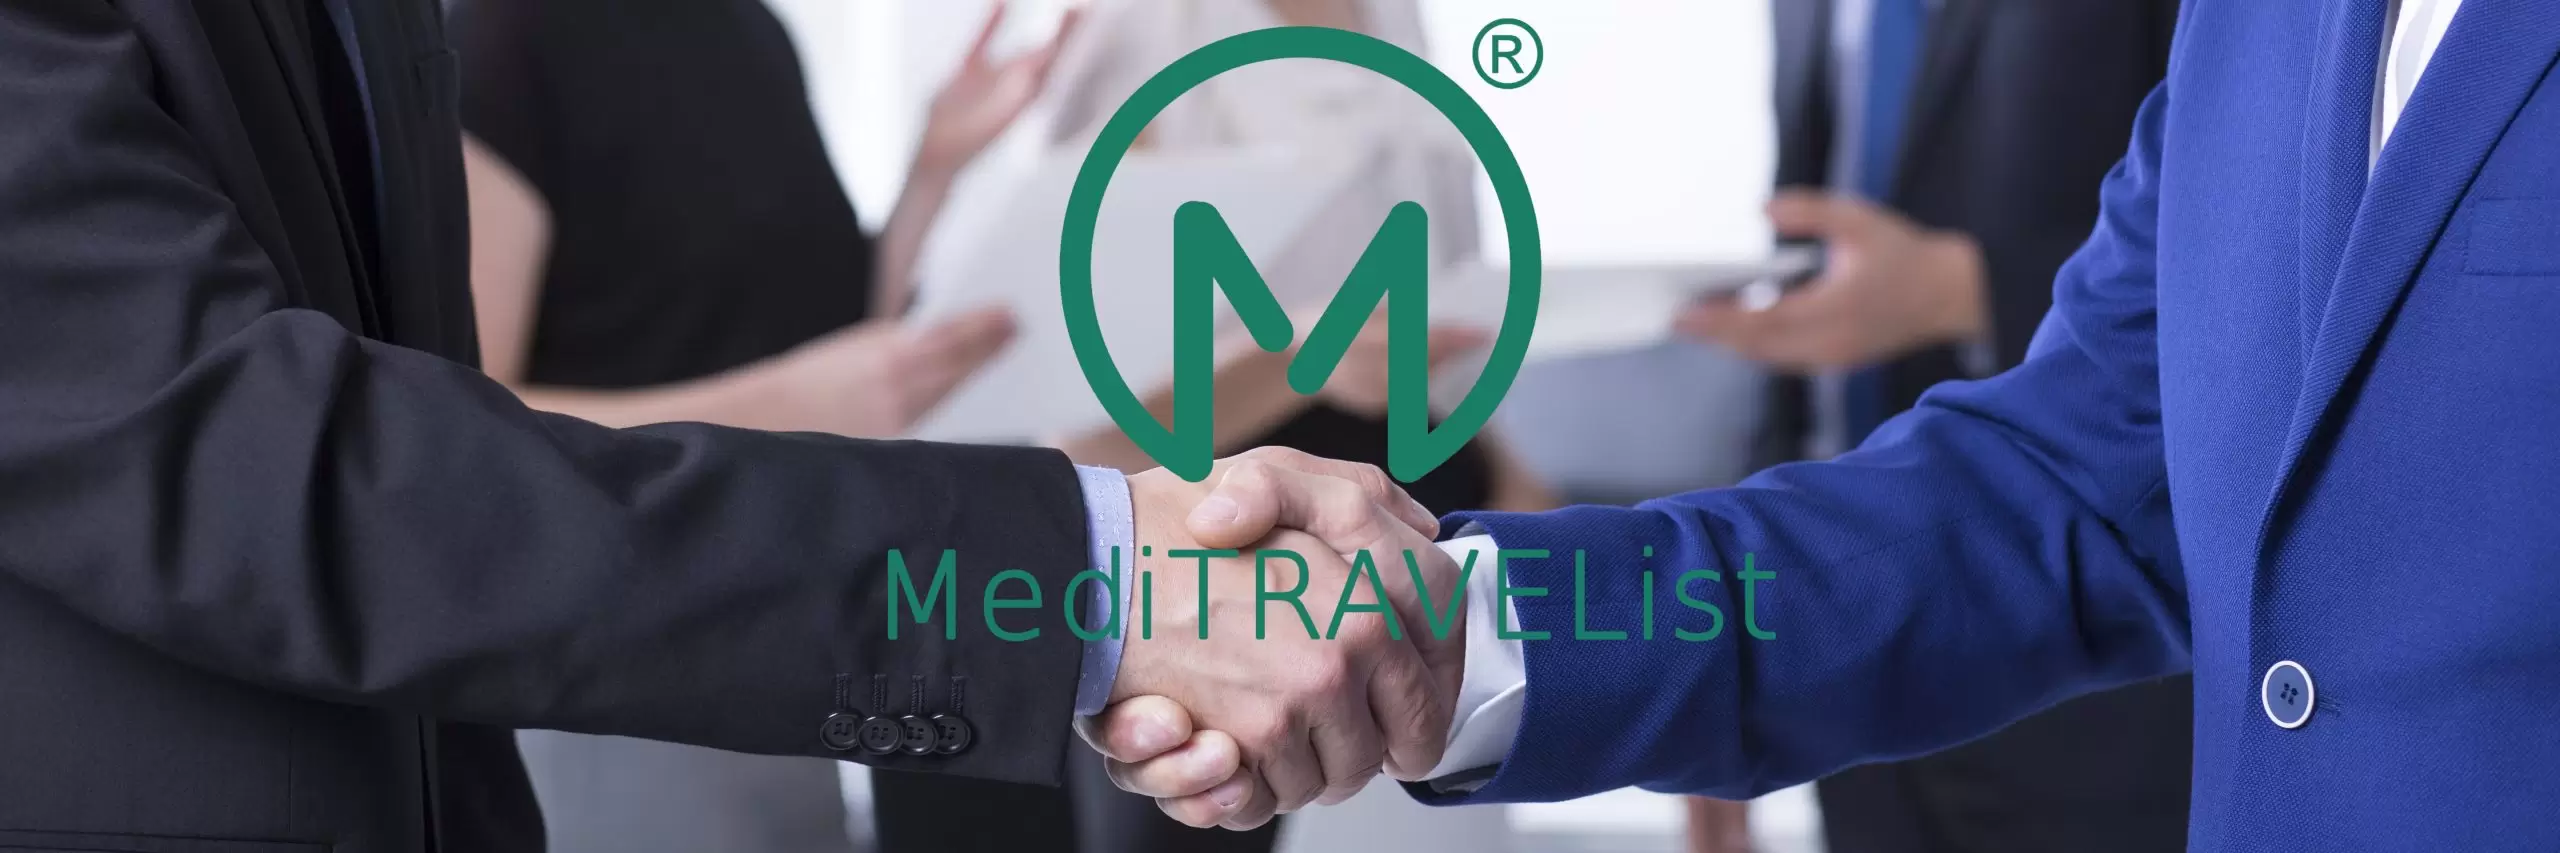 Meditravelist Partnership services title image